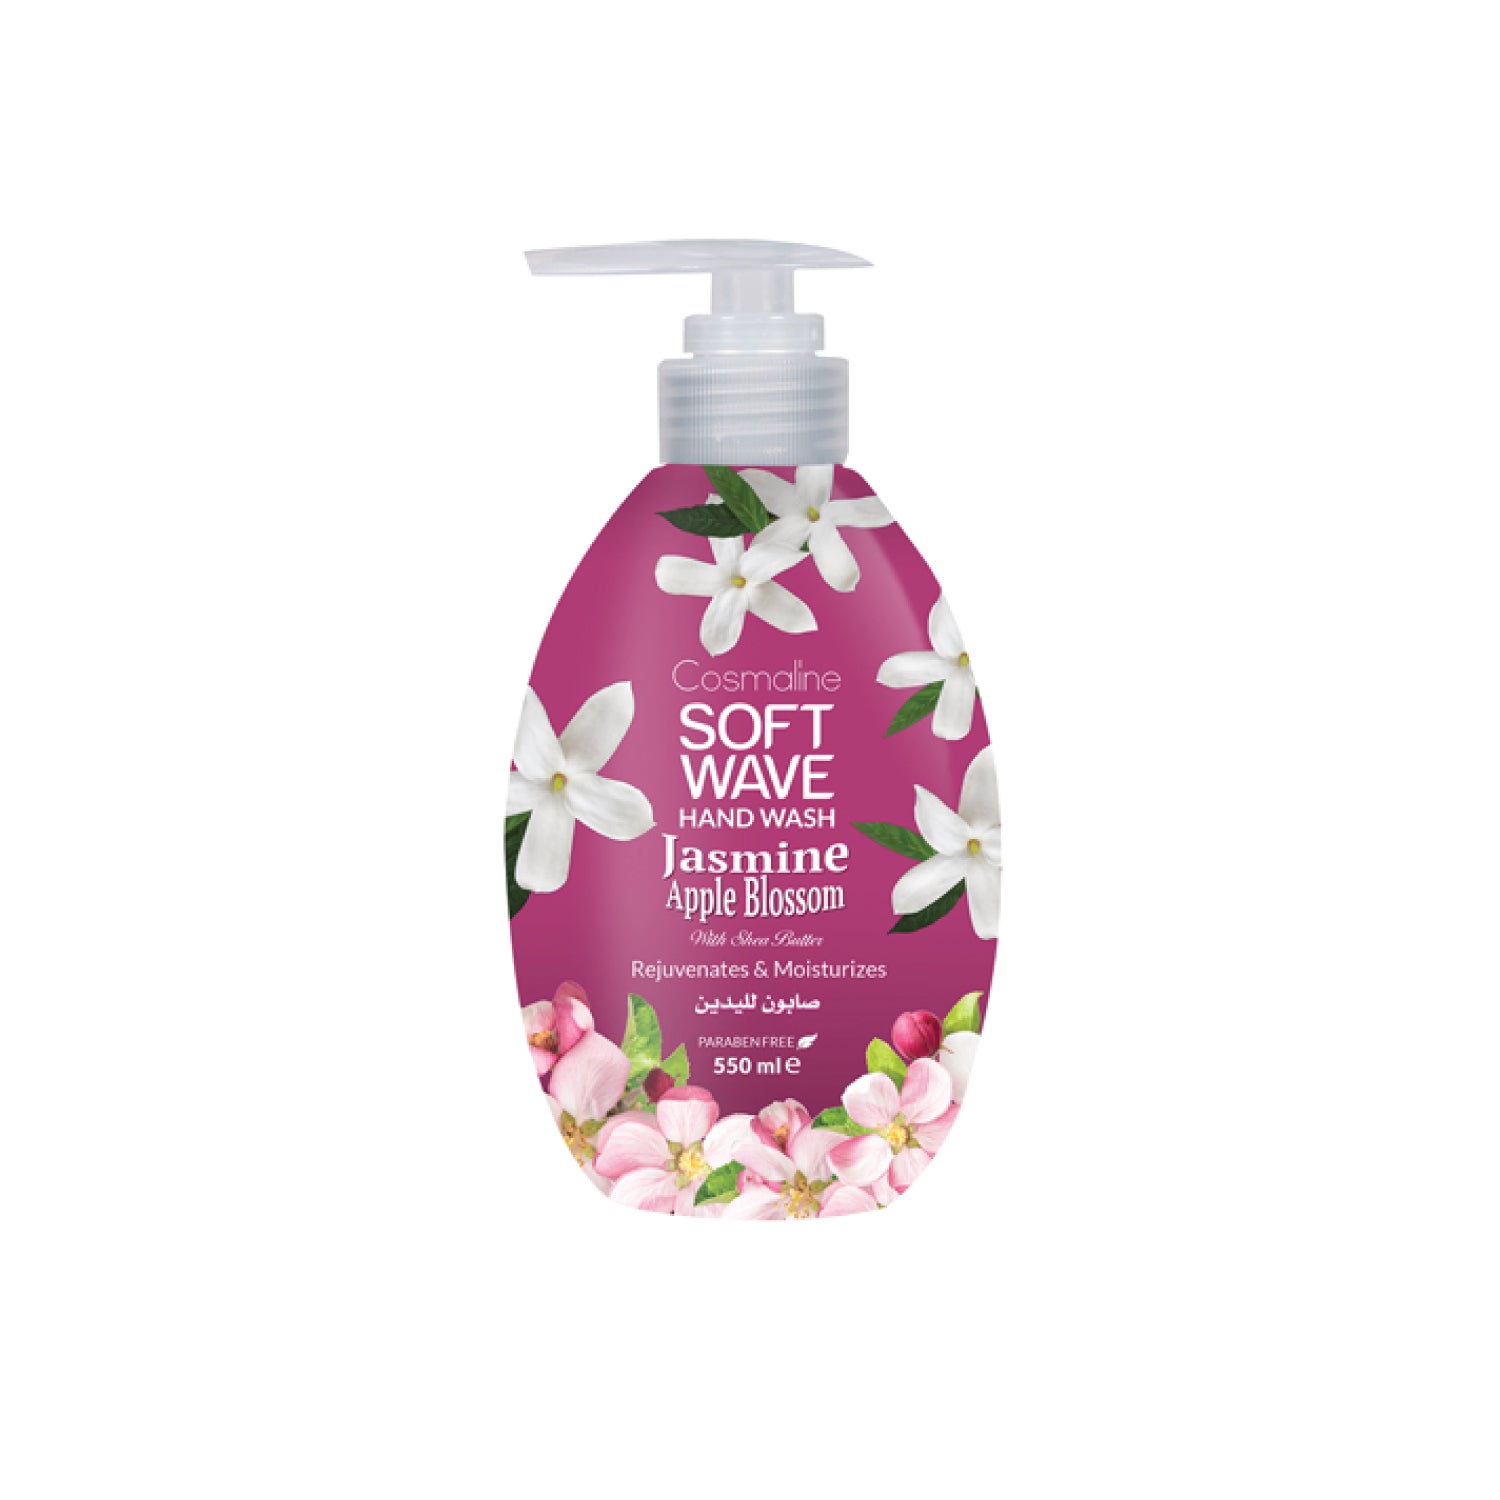 Soft Wave Hand Wash Jasmine & Apple Blossom 550ml - MazenOnline